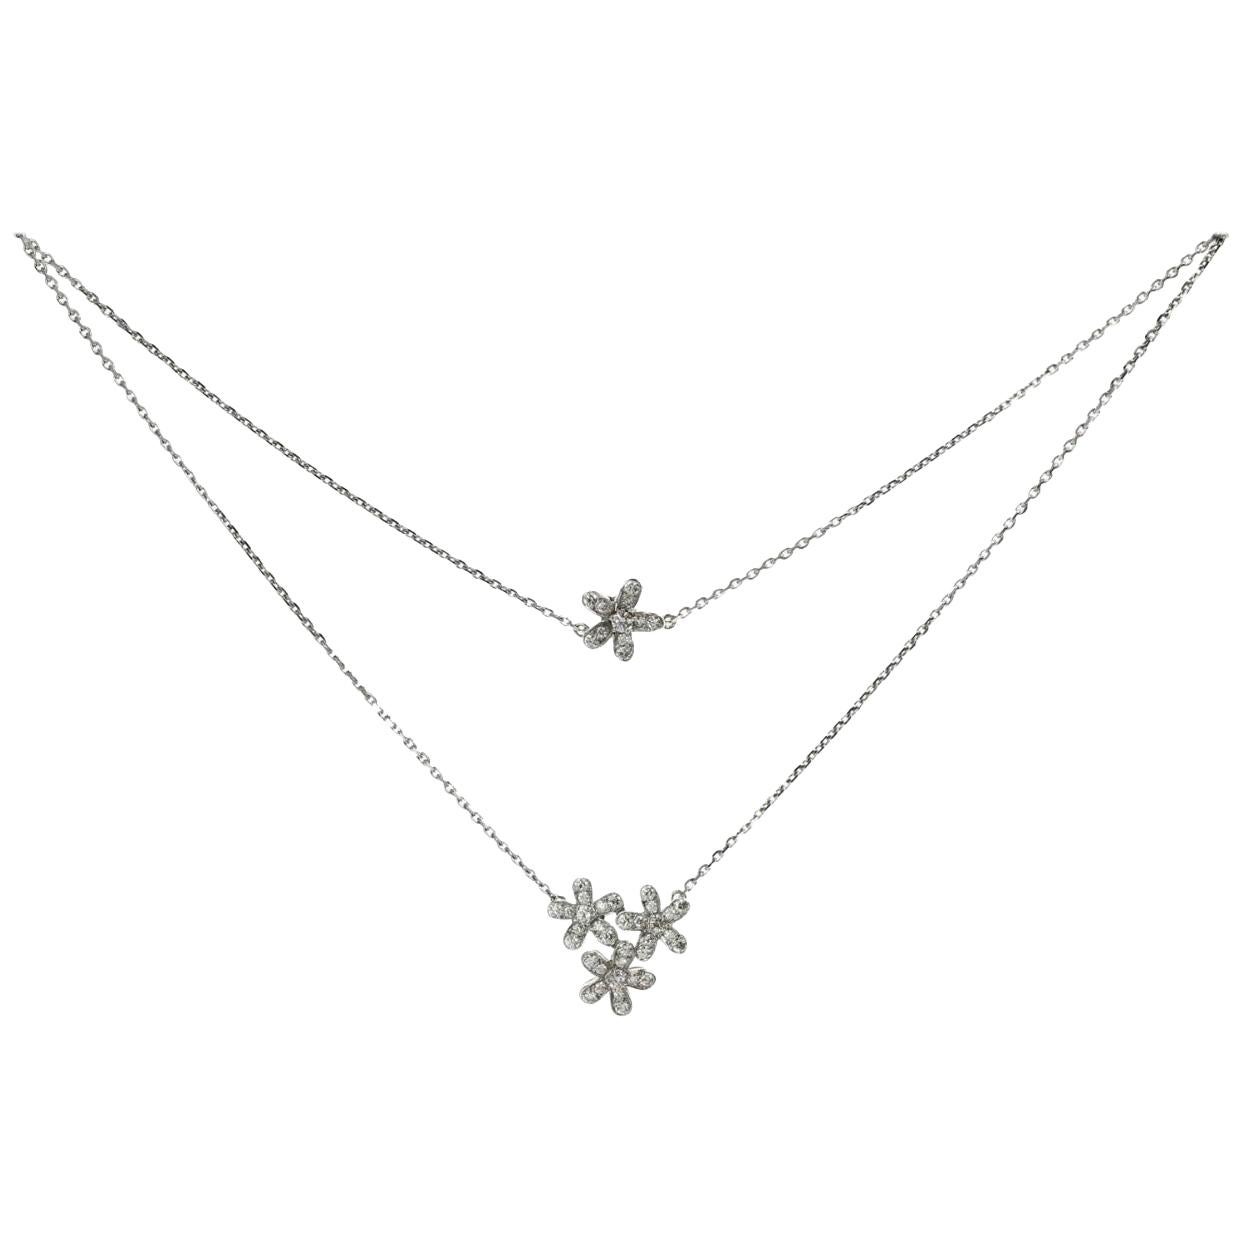 Van Cleef & Arpels Socrates 3 Flower Diamond Pendant Necklace in White Gold